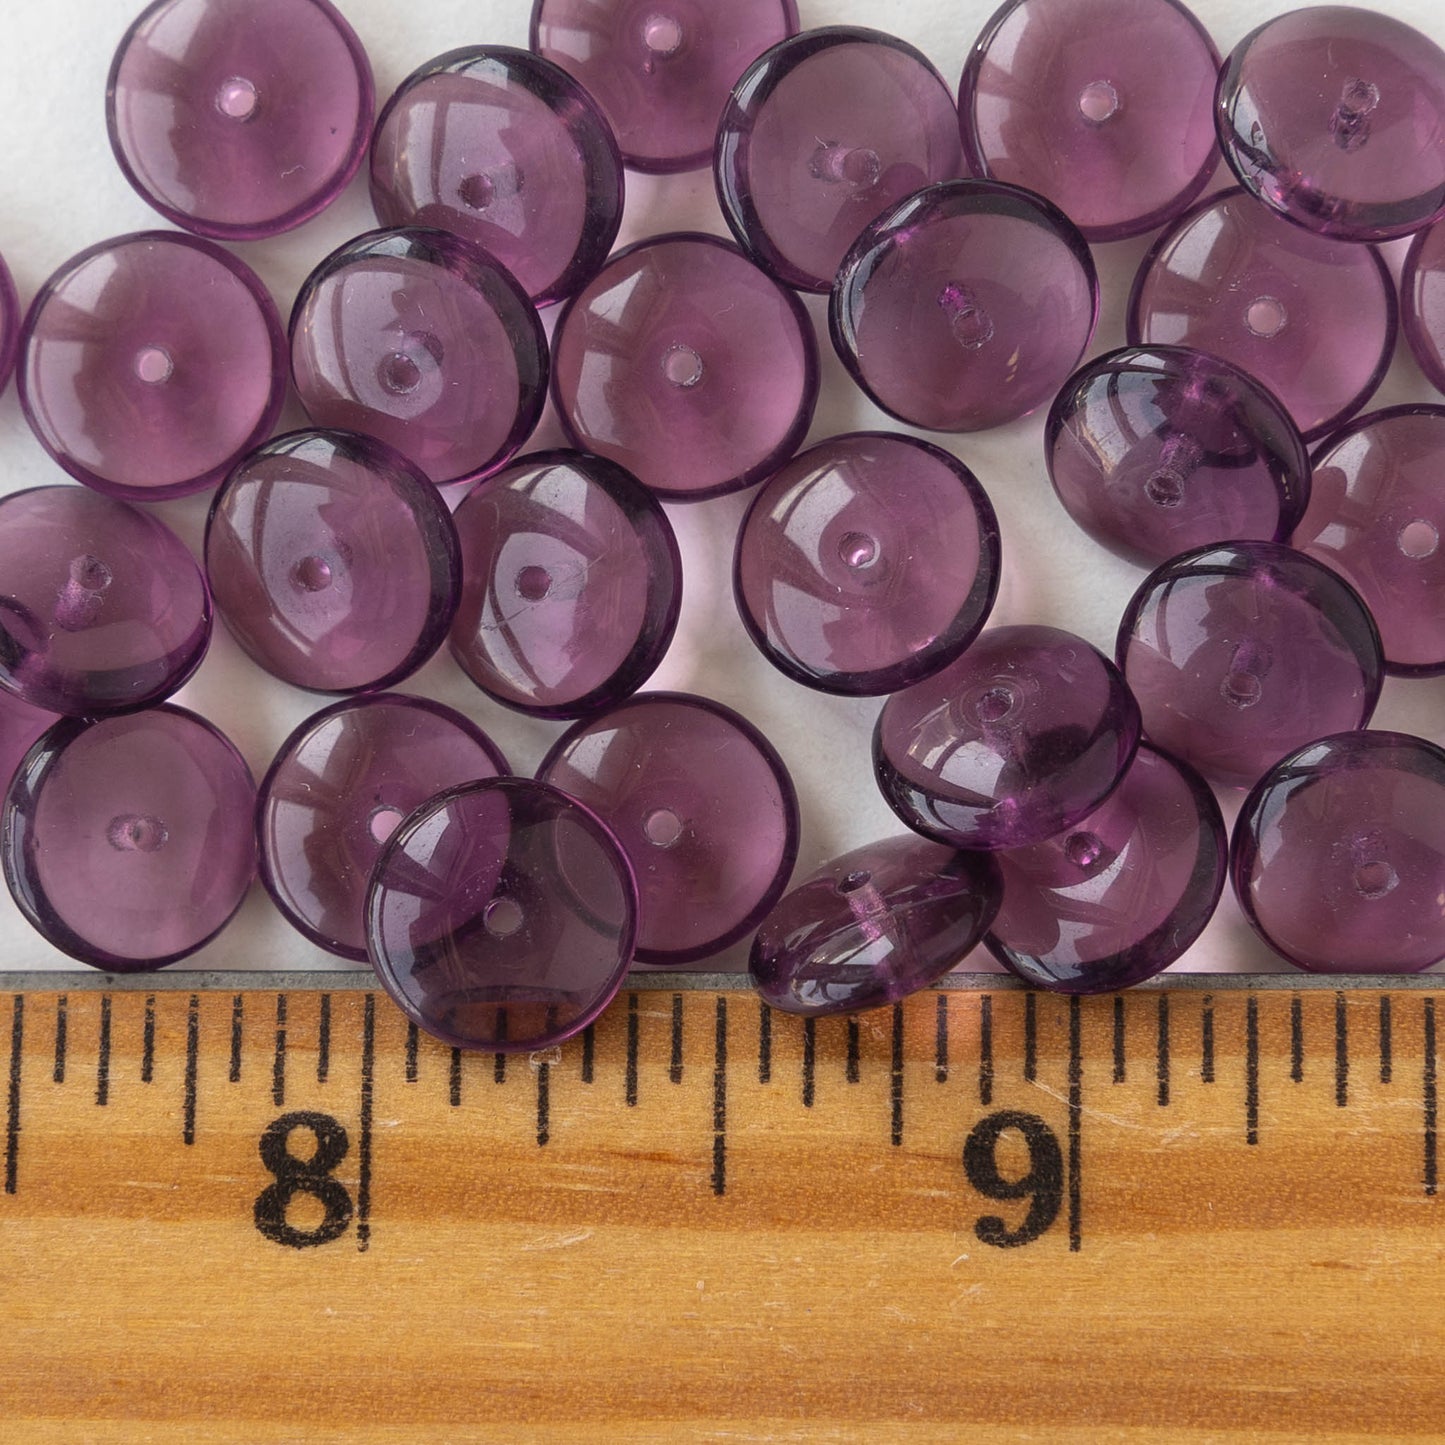 10mm Rondelle Beads - Dk. Amethyst - 30 Beads